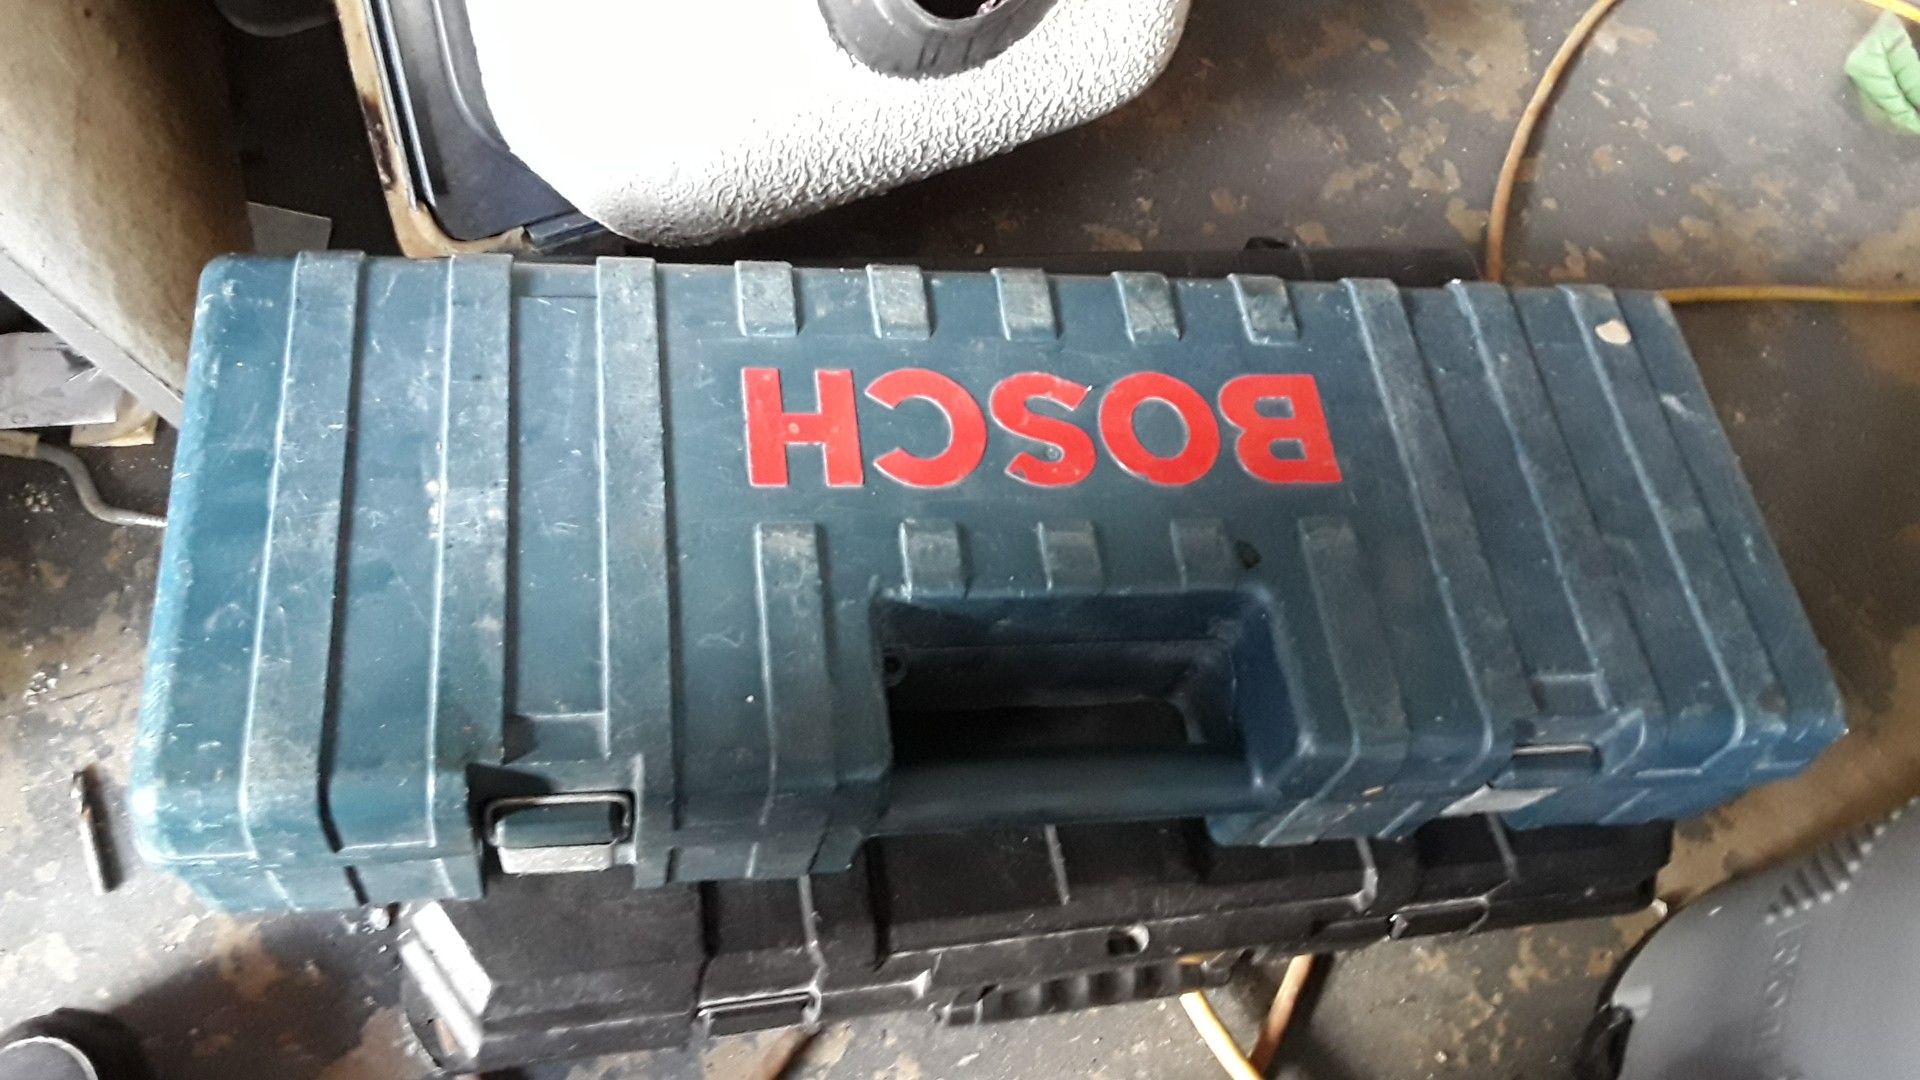 Bosch drill case